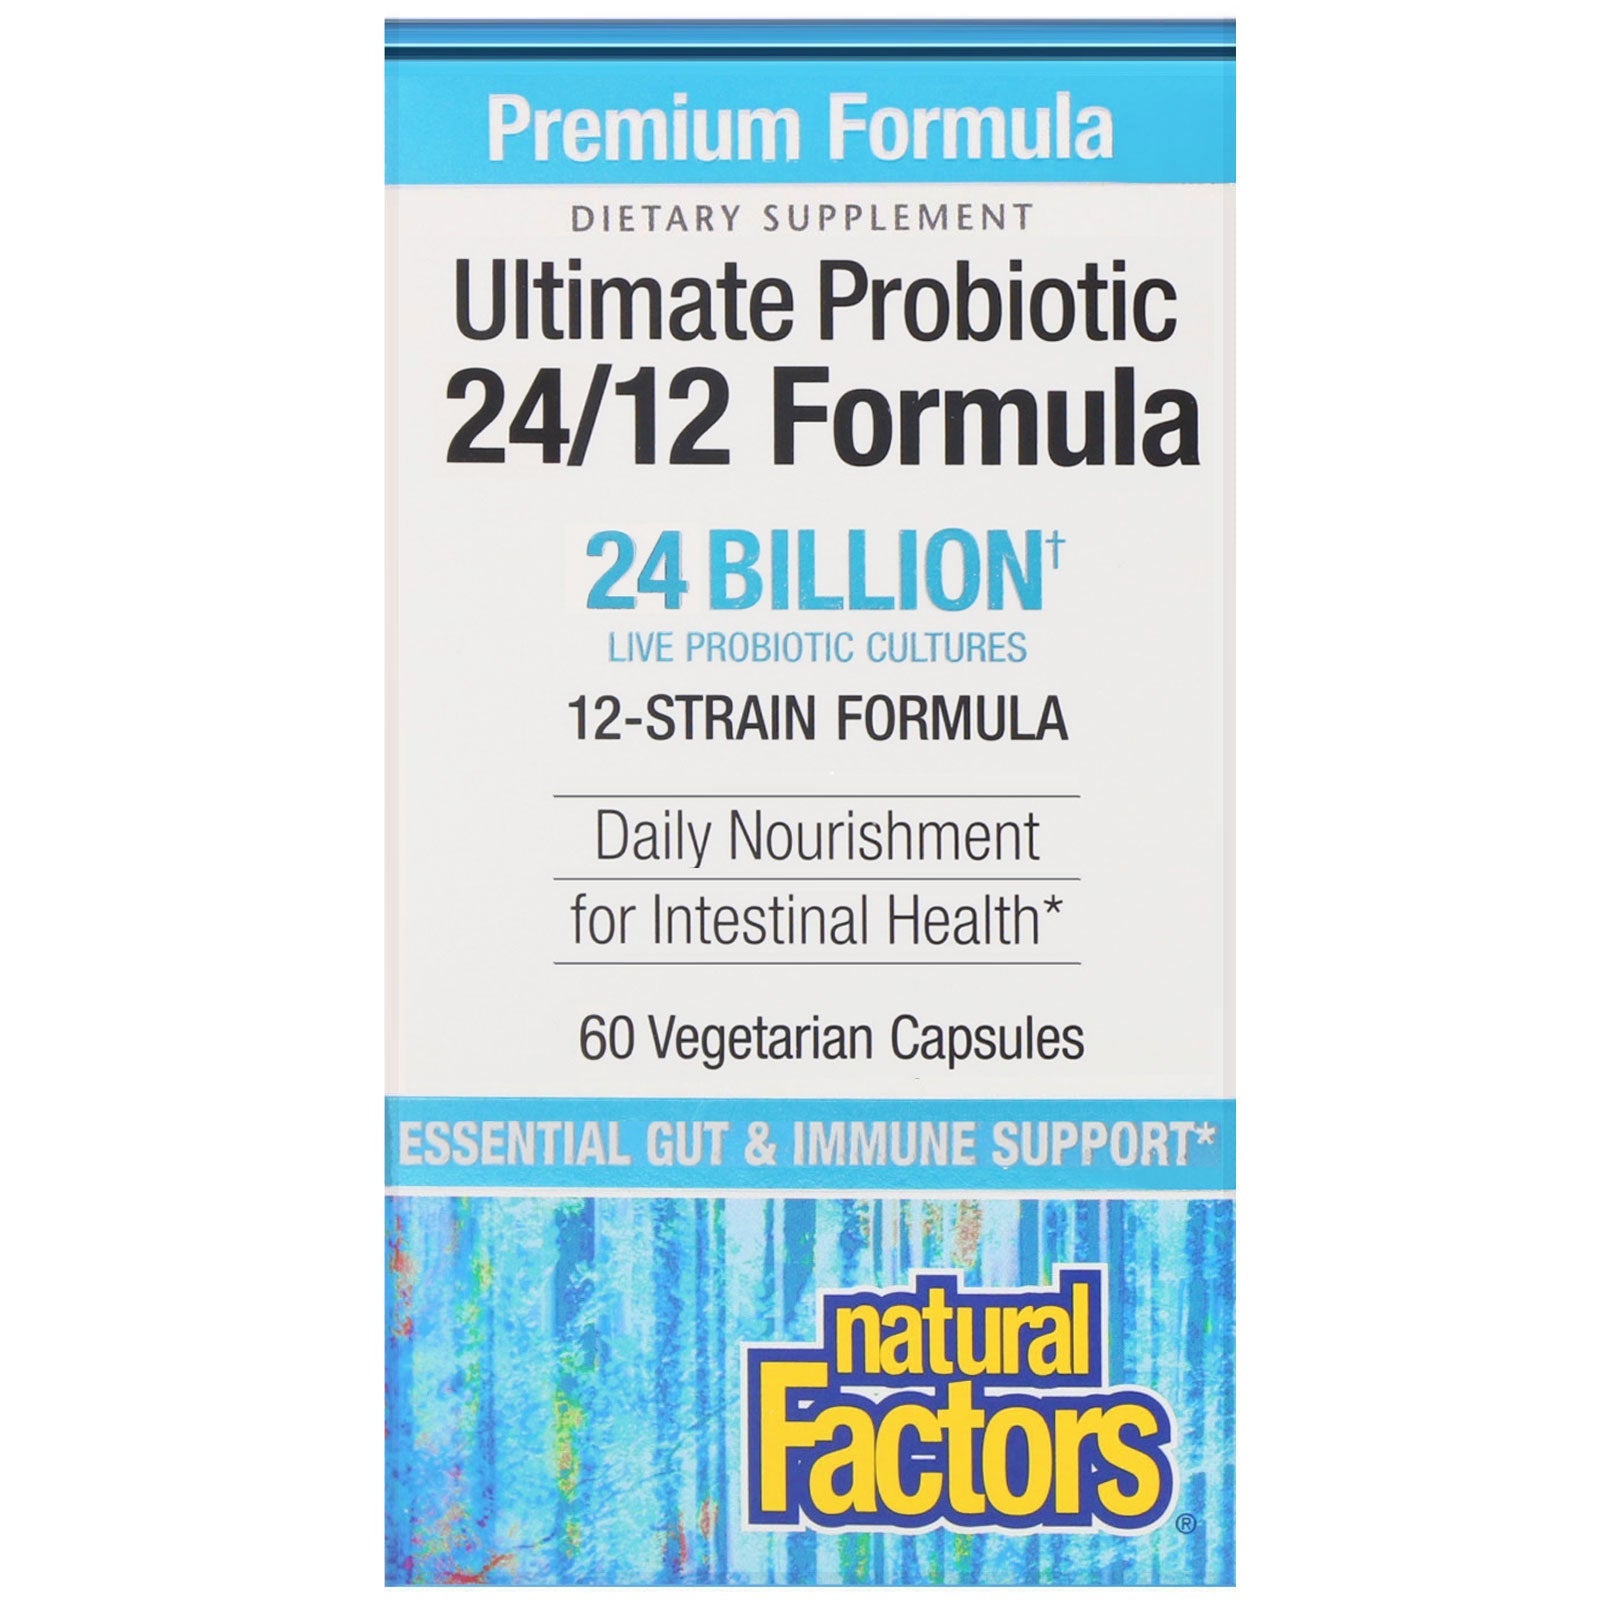 Natural Factors Ultimate Probiotic 24/12 Formula 24 Billion